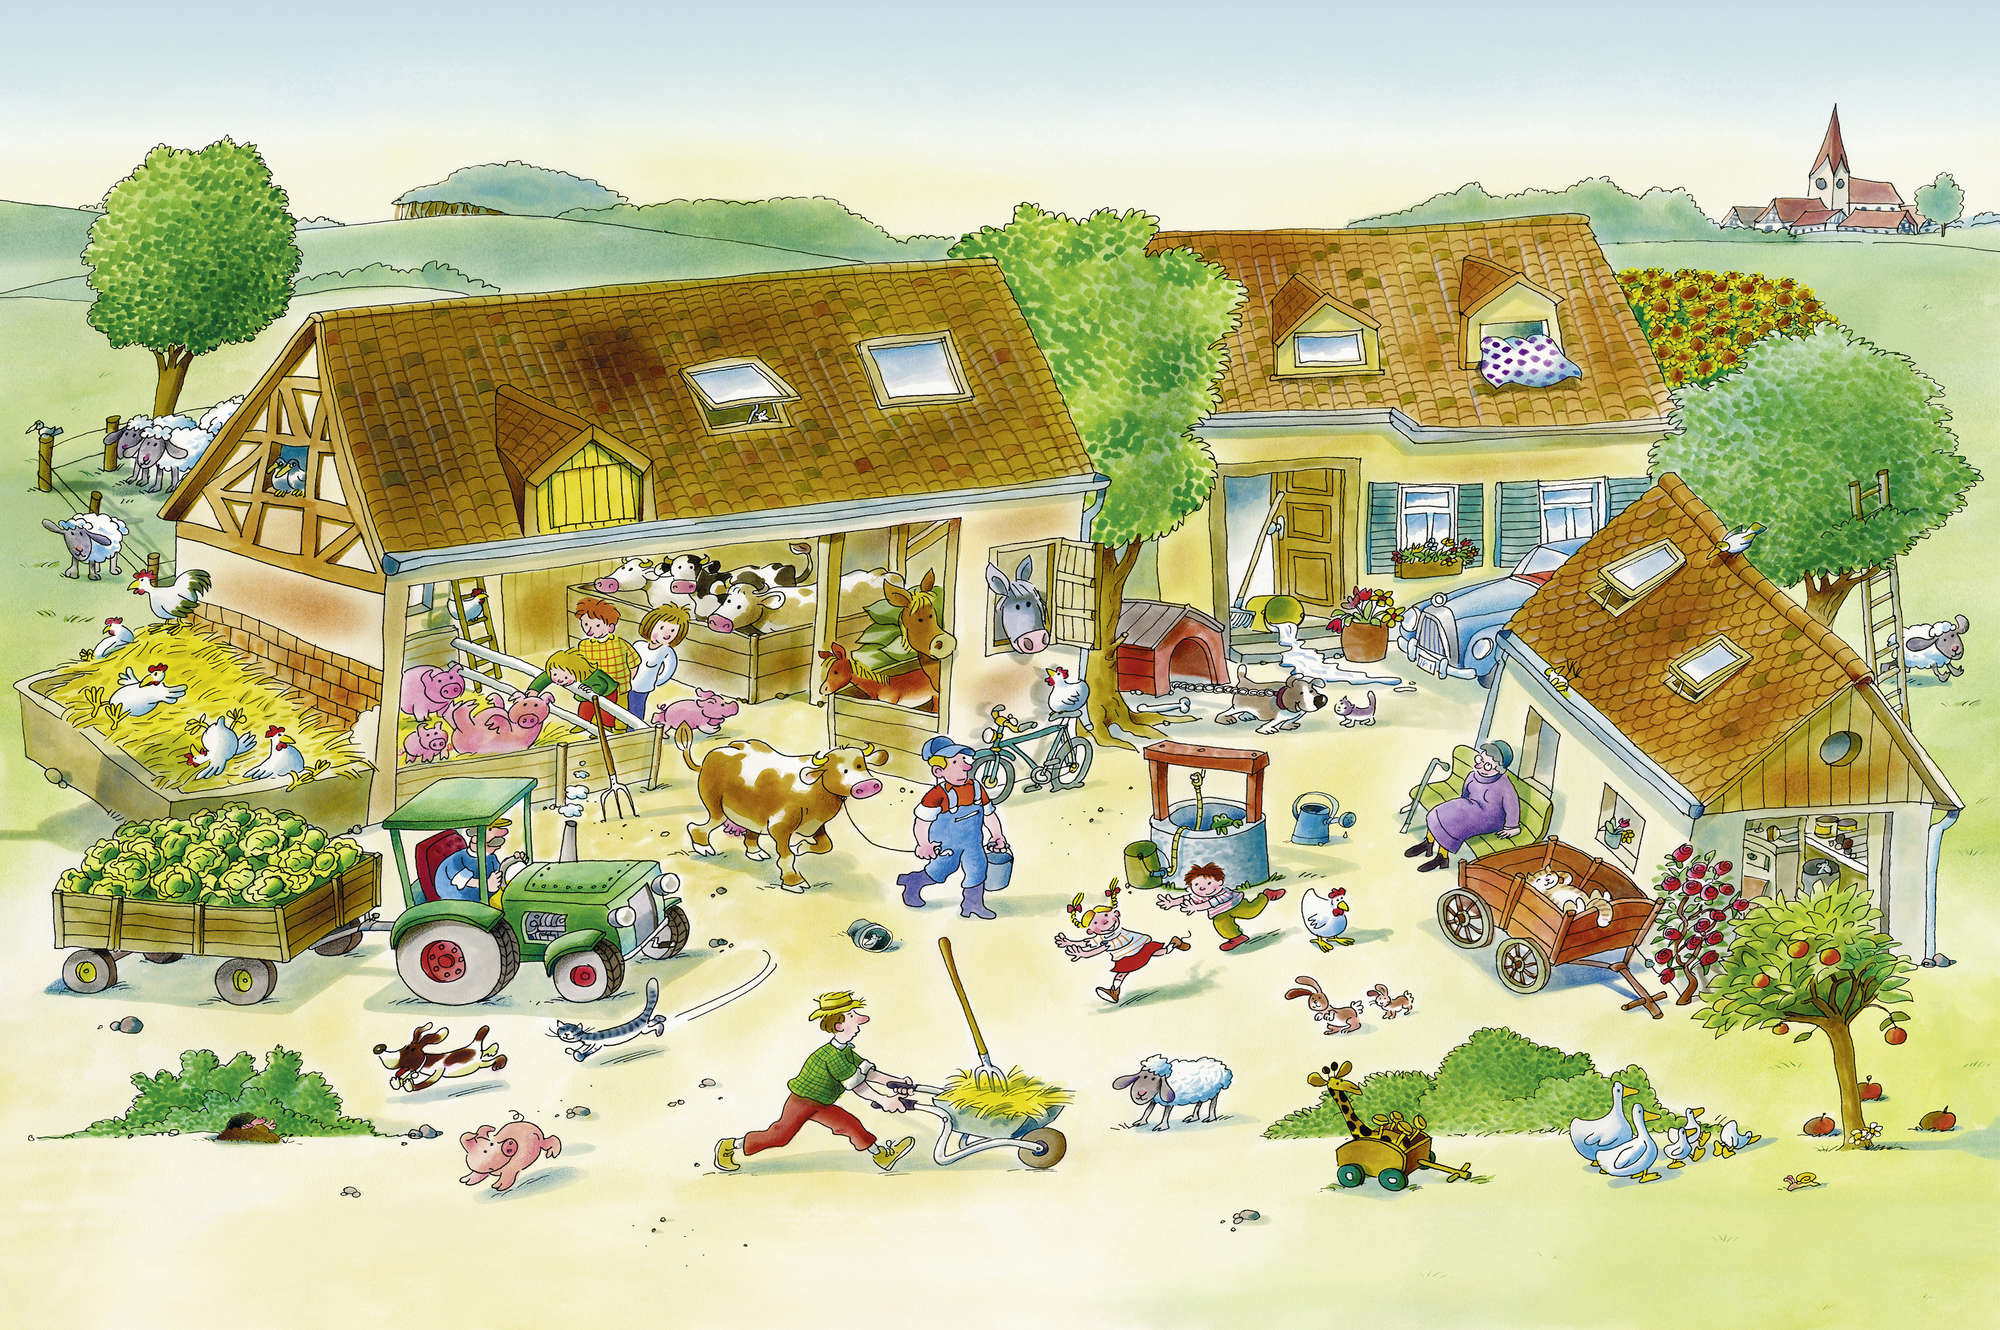             Kinderboerderij-behang met dieren in bruin en groen op matte gladde vliesstof
        